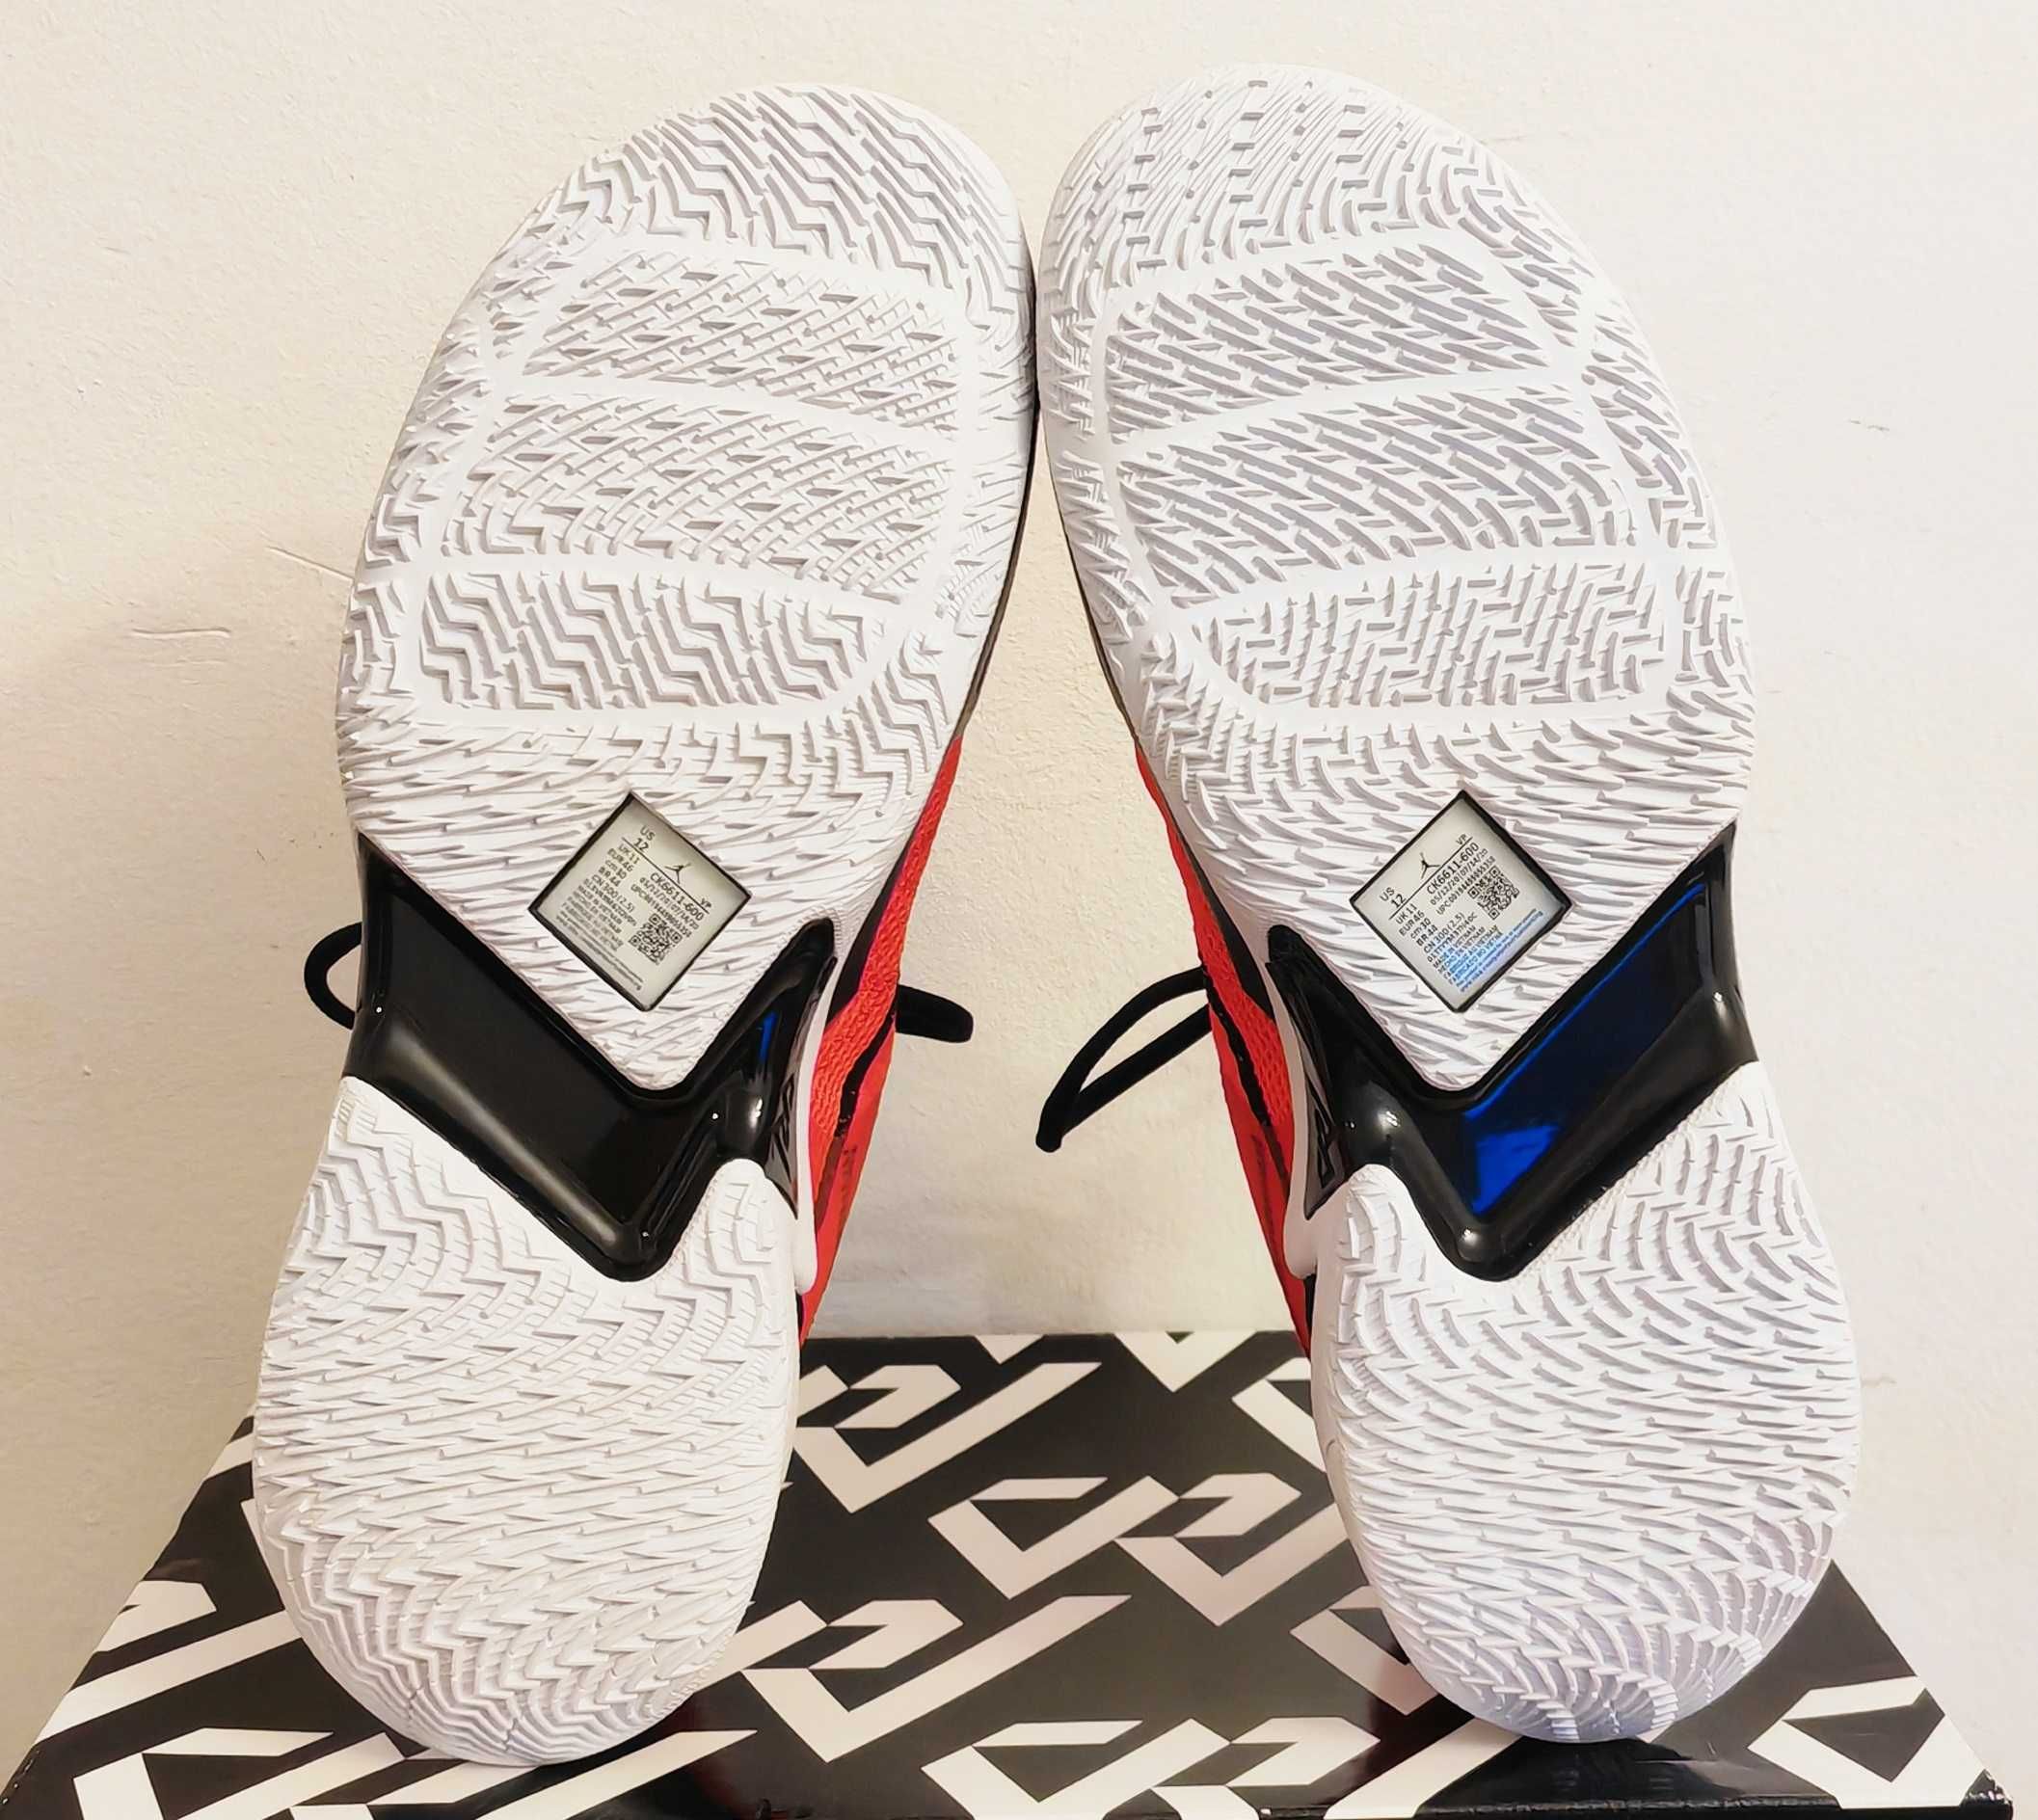 Nike AIR Jordan Why Not Zero.3 Se 46-ти номер чисто нови в кутия